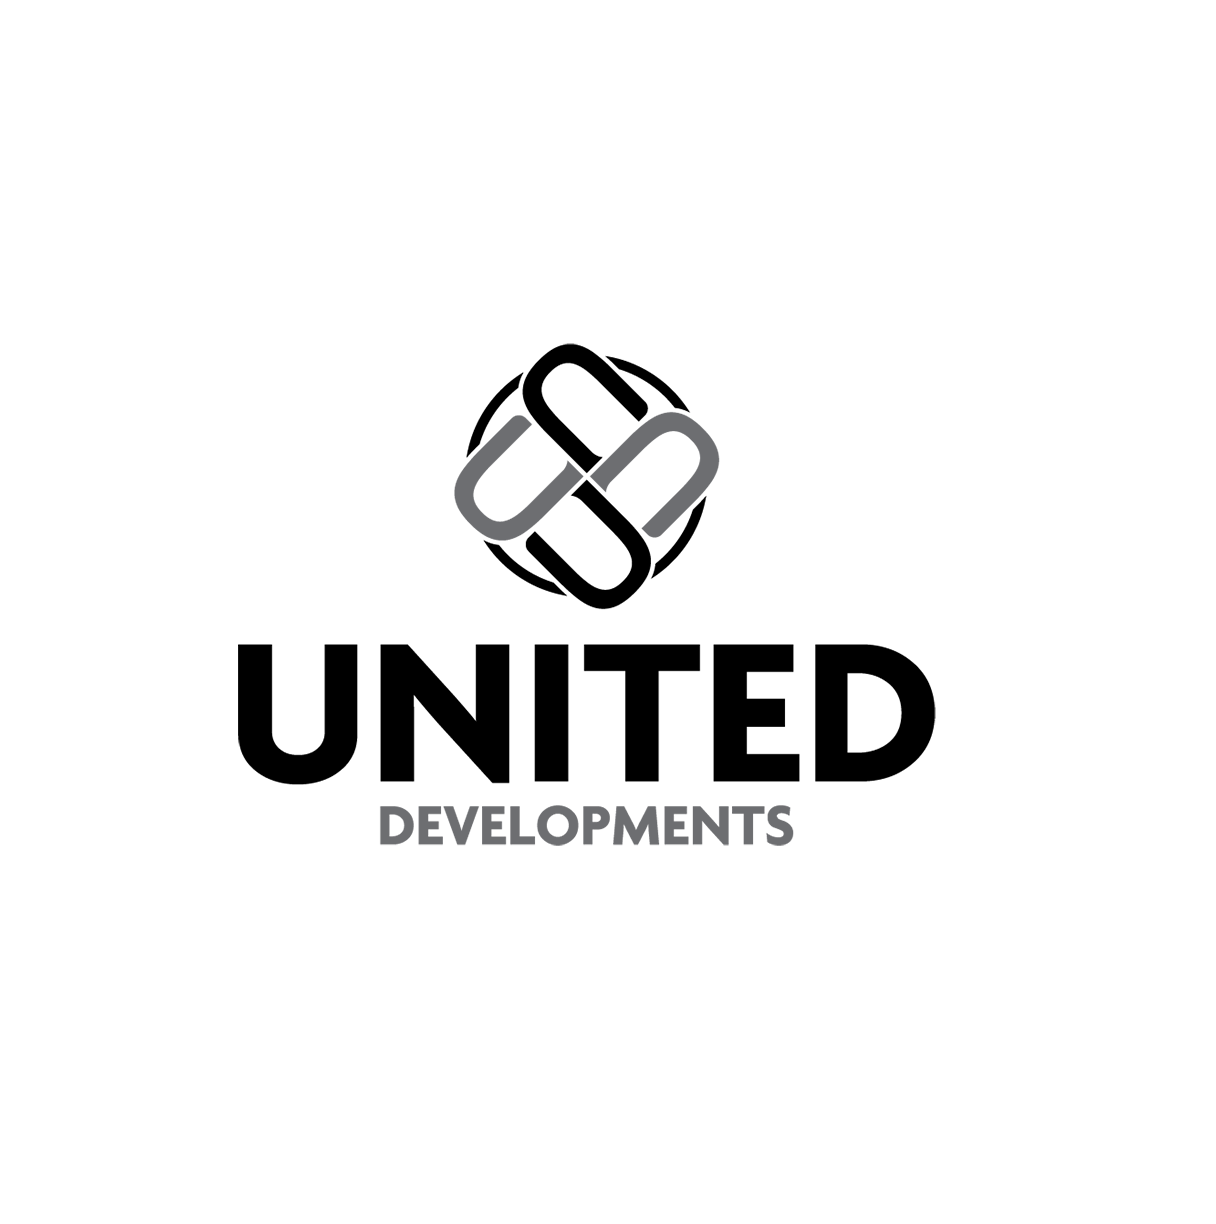 United Developments